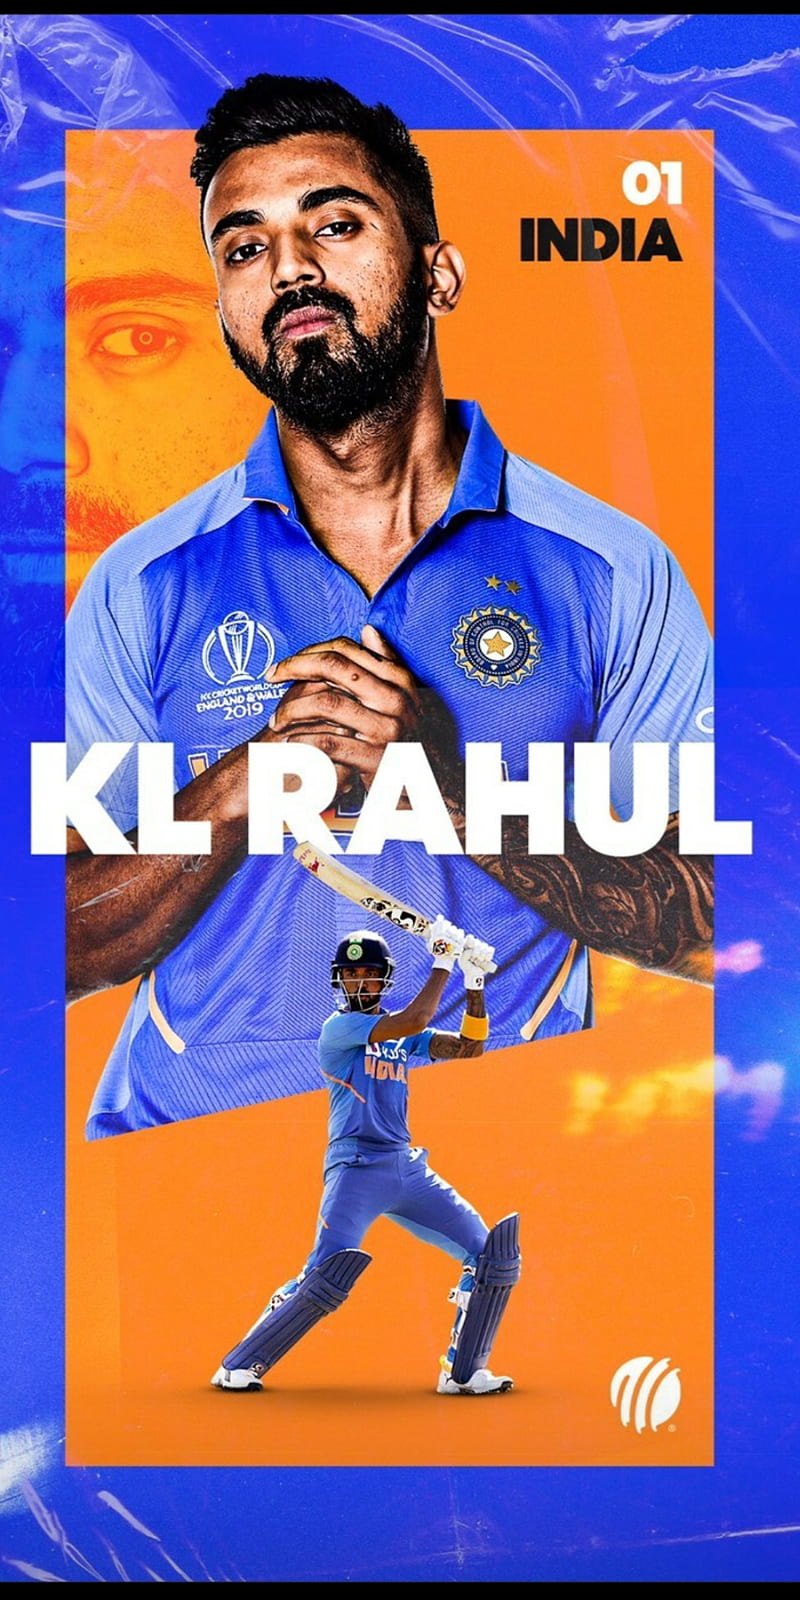 Kl rahul , ind vs aus, india, kings xi punjab, kl rahul, HD phone wallpaper